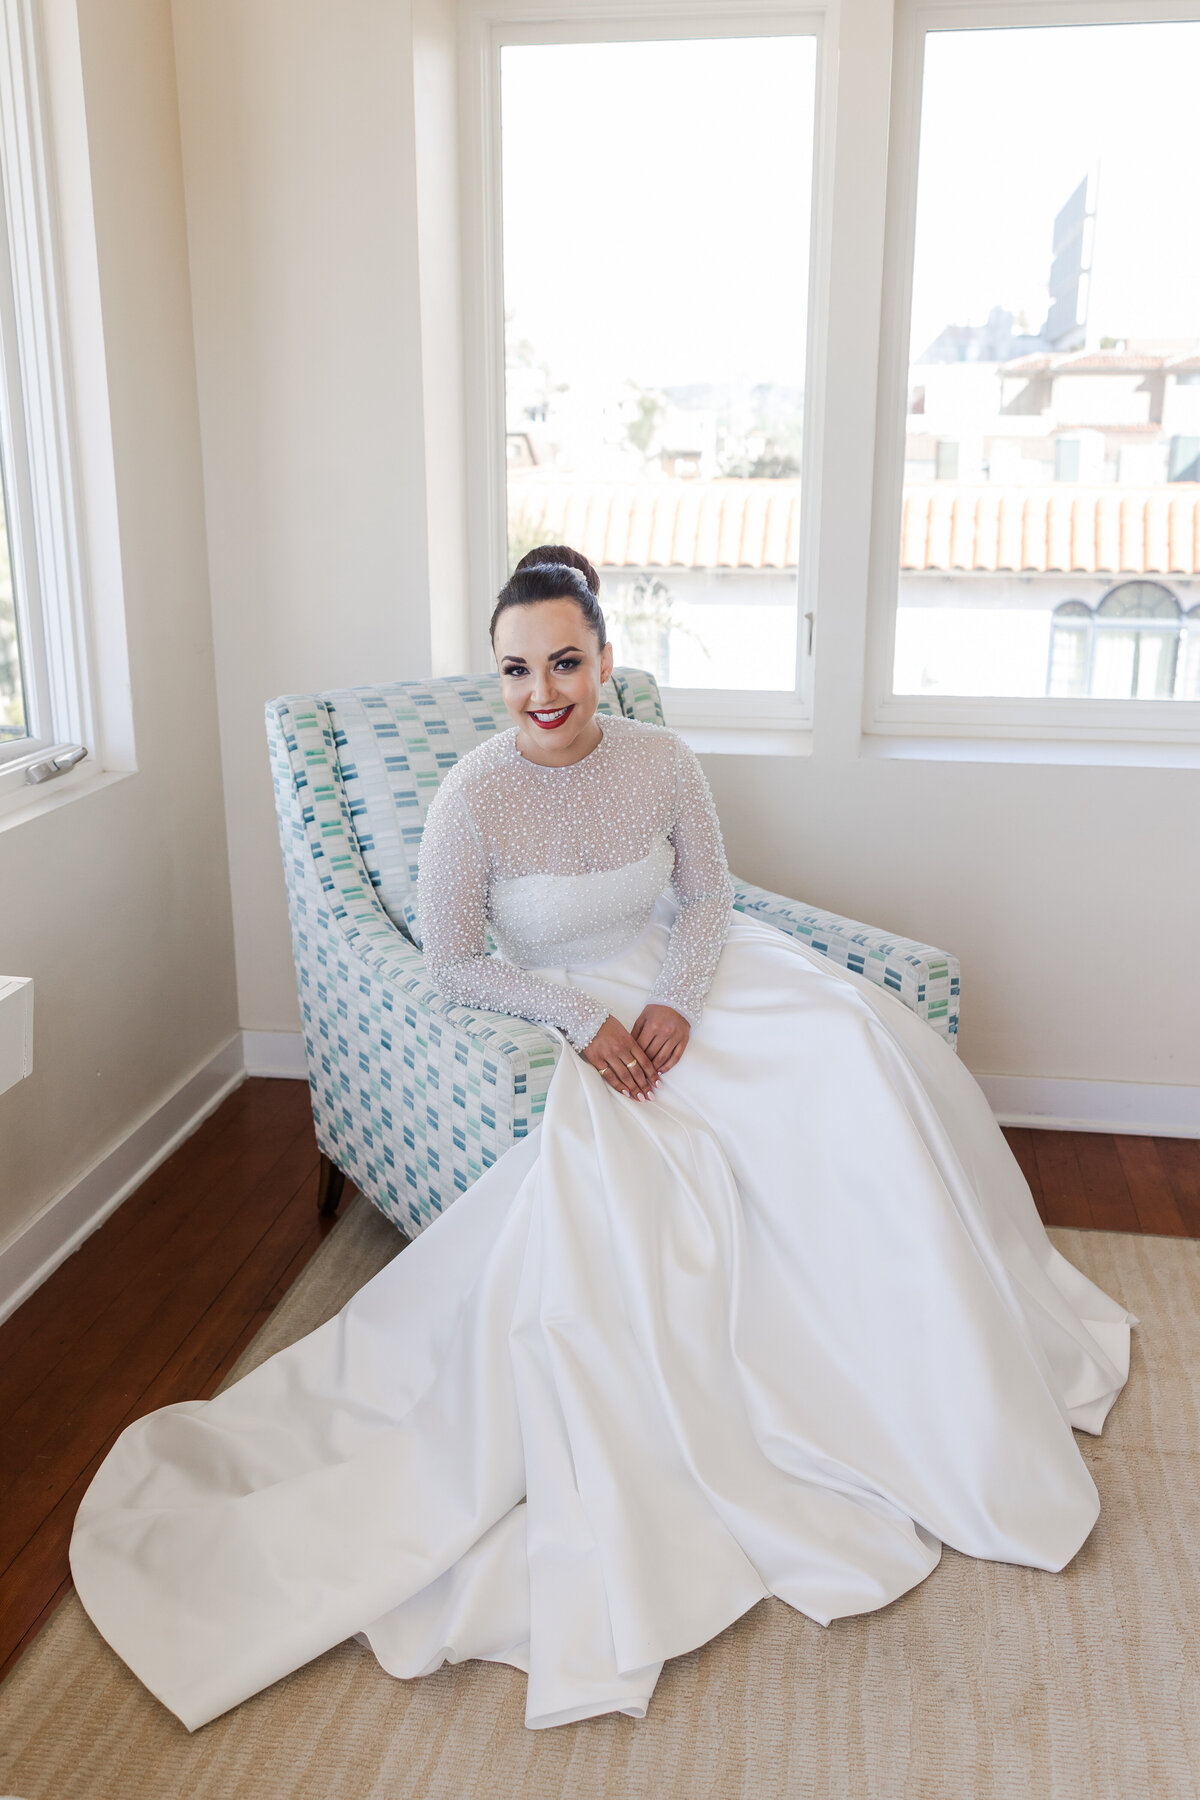 bride-sitting-portrait